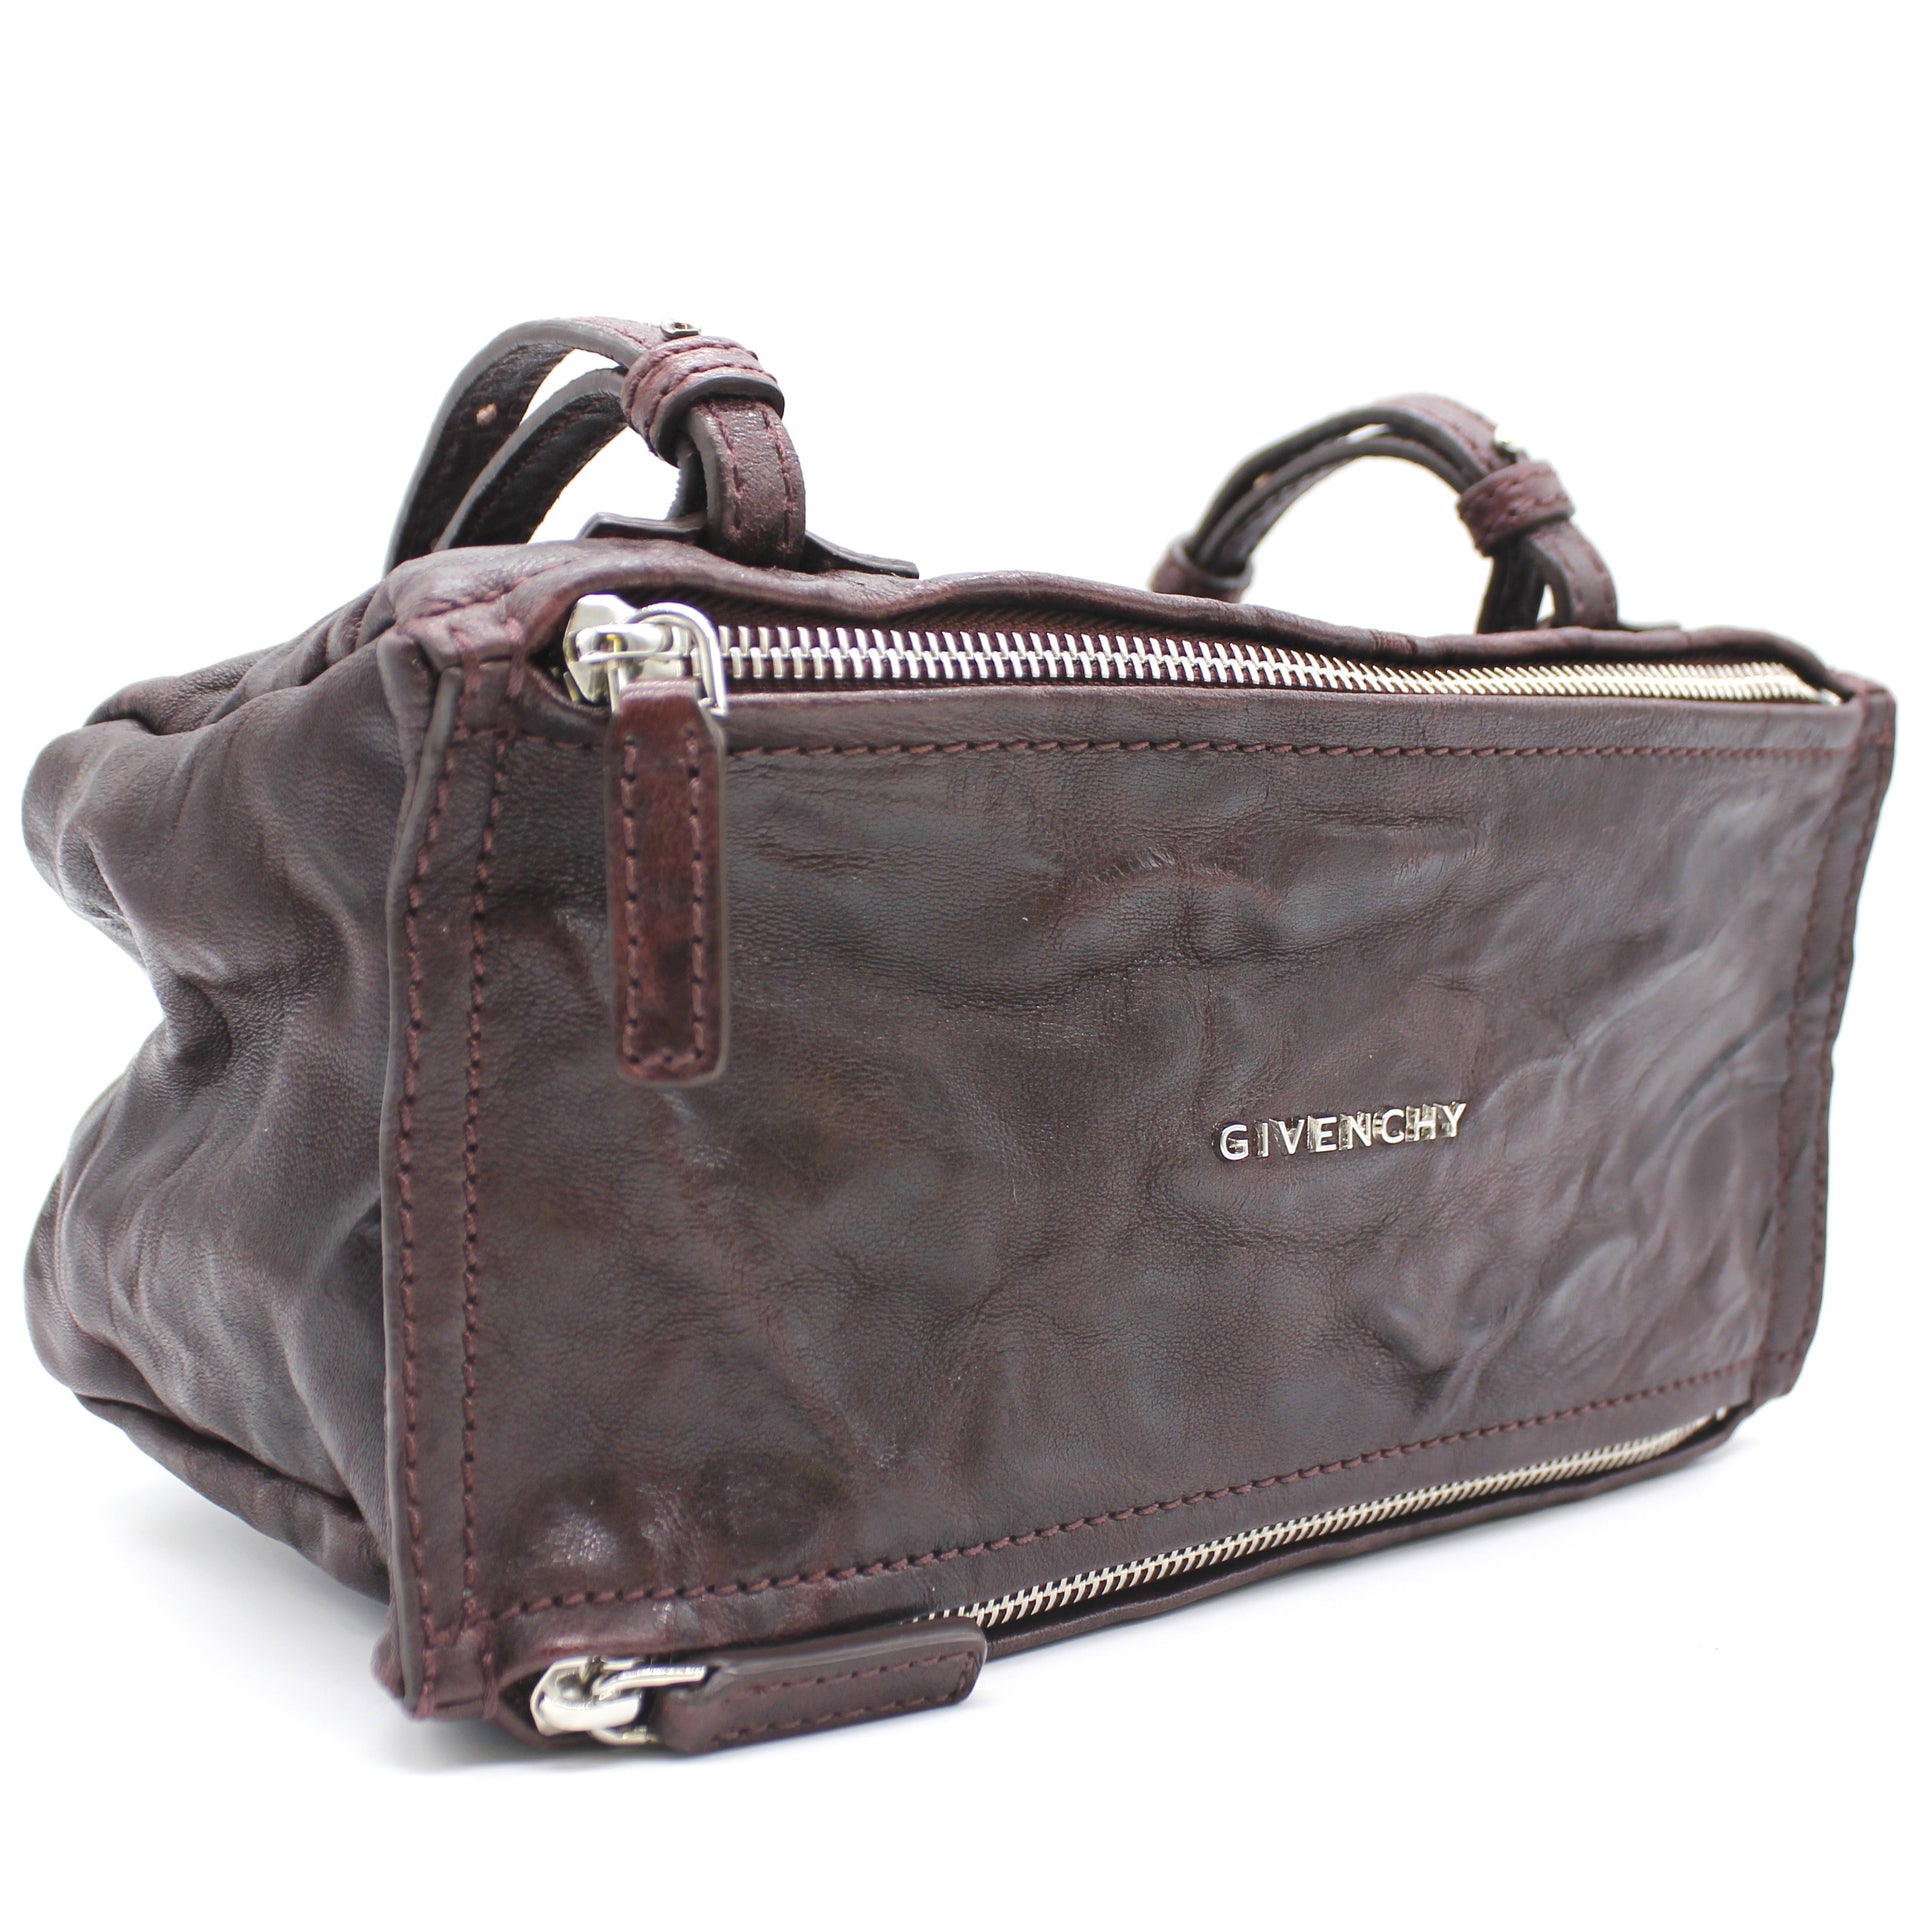 Givenchy 'Pandora' bag